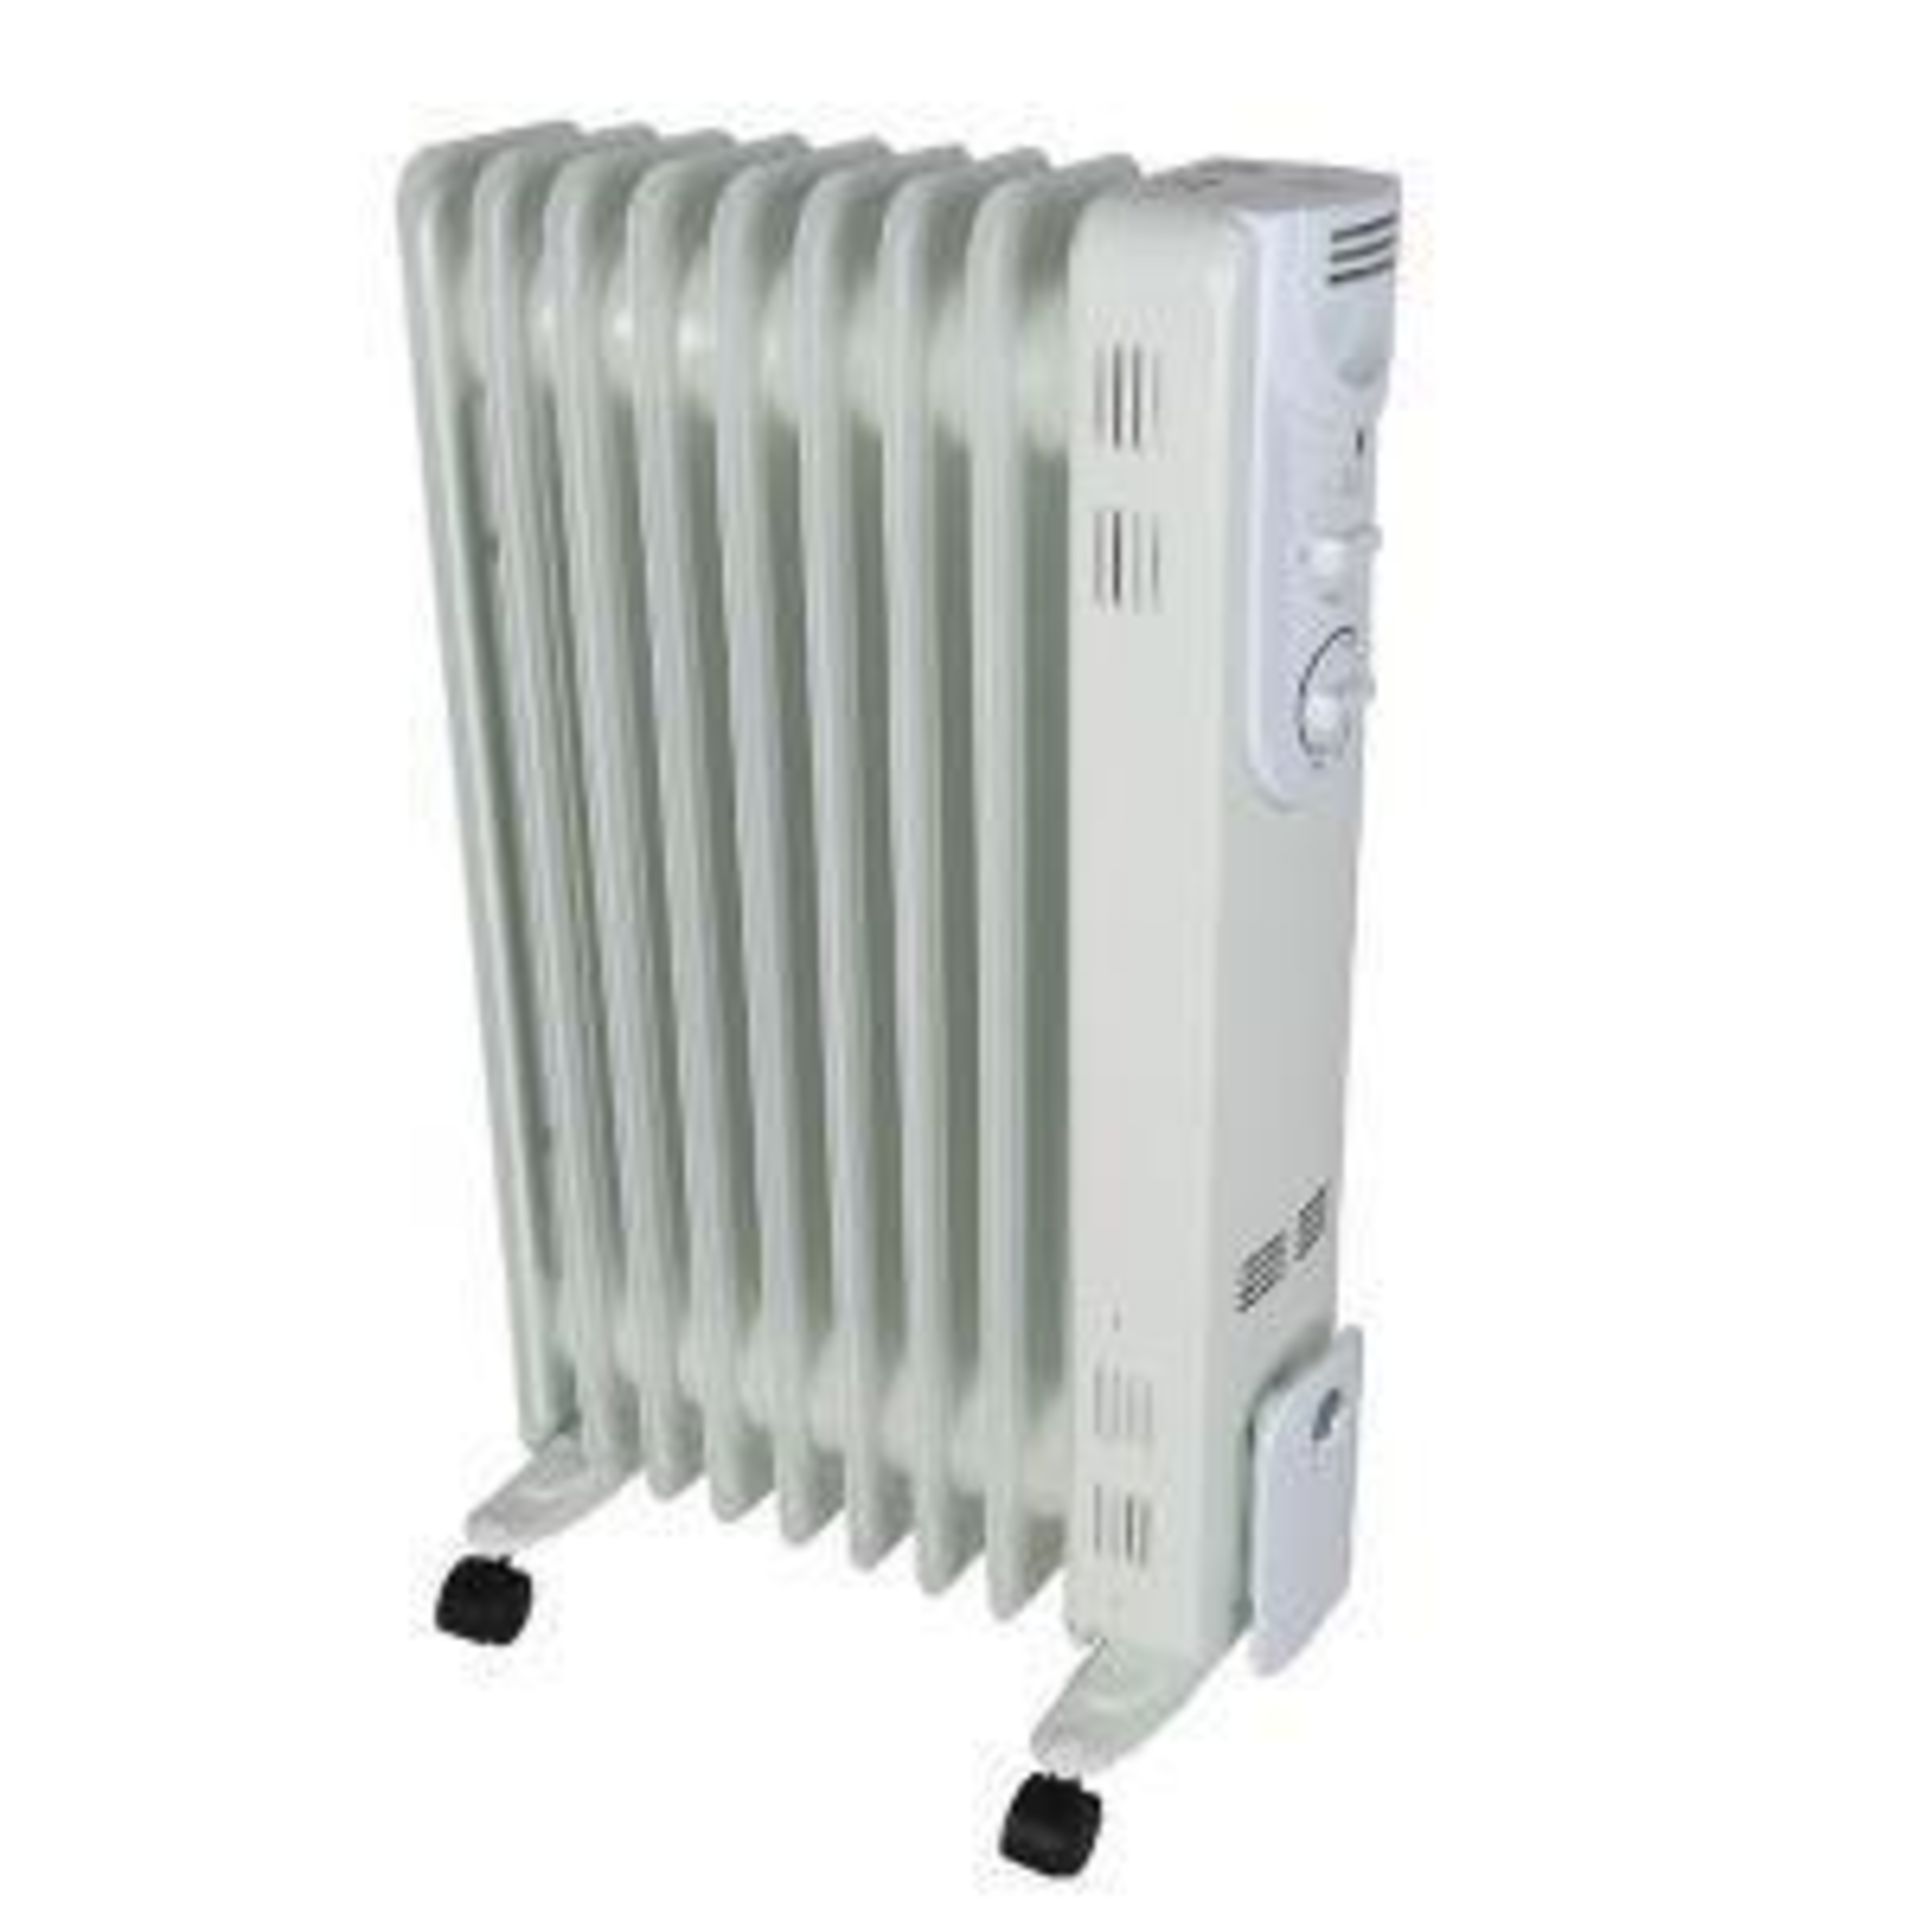 Electric Radiator Oil CYBL20-9 White Portable Freestanding 3 Heat Settings 2000W (LOCATION - H/S 3.